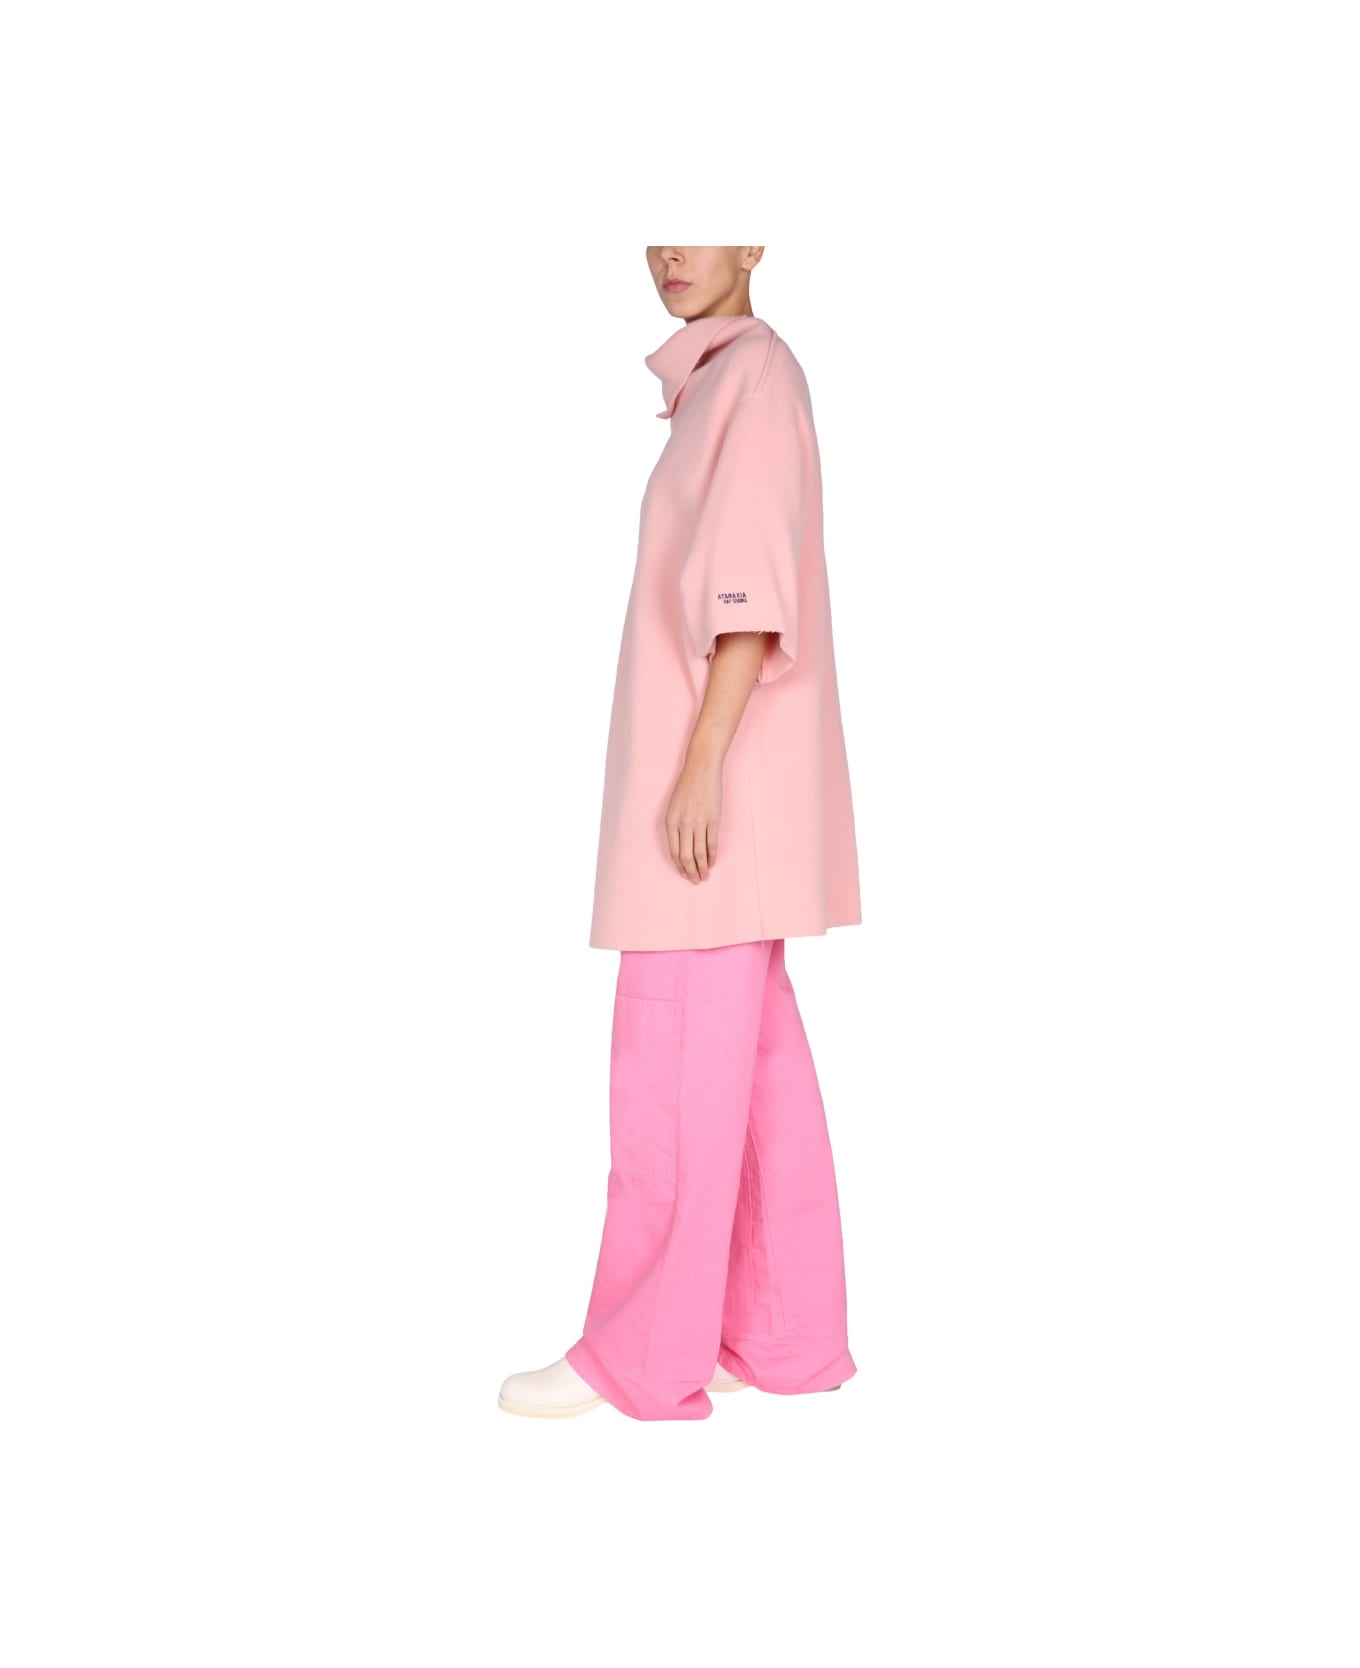 Raf Simons "ataraxia" Wool Blend Dress - PINK